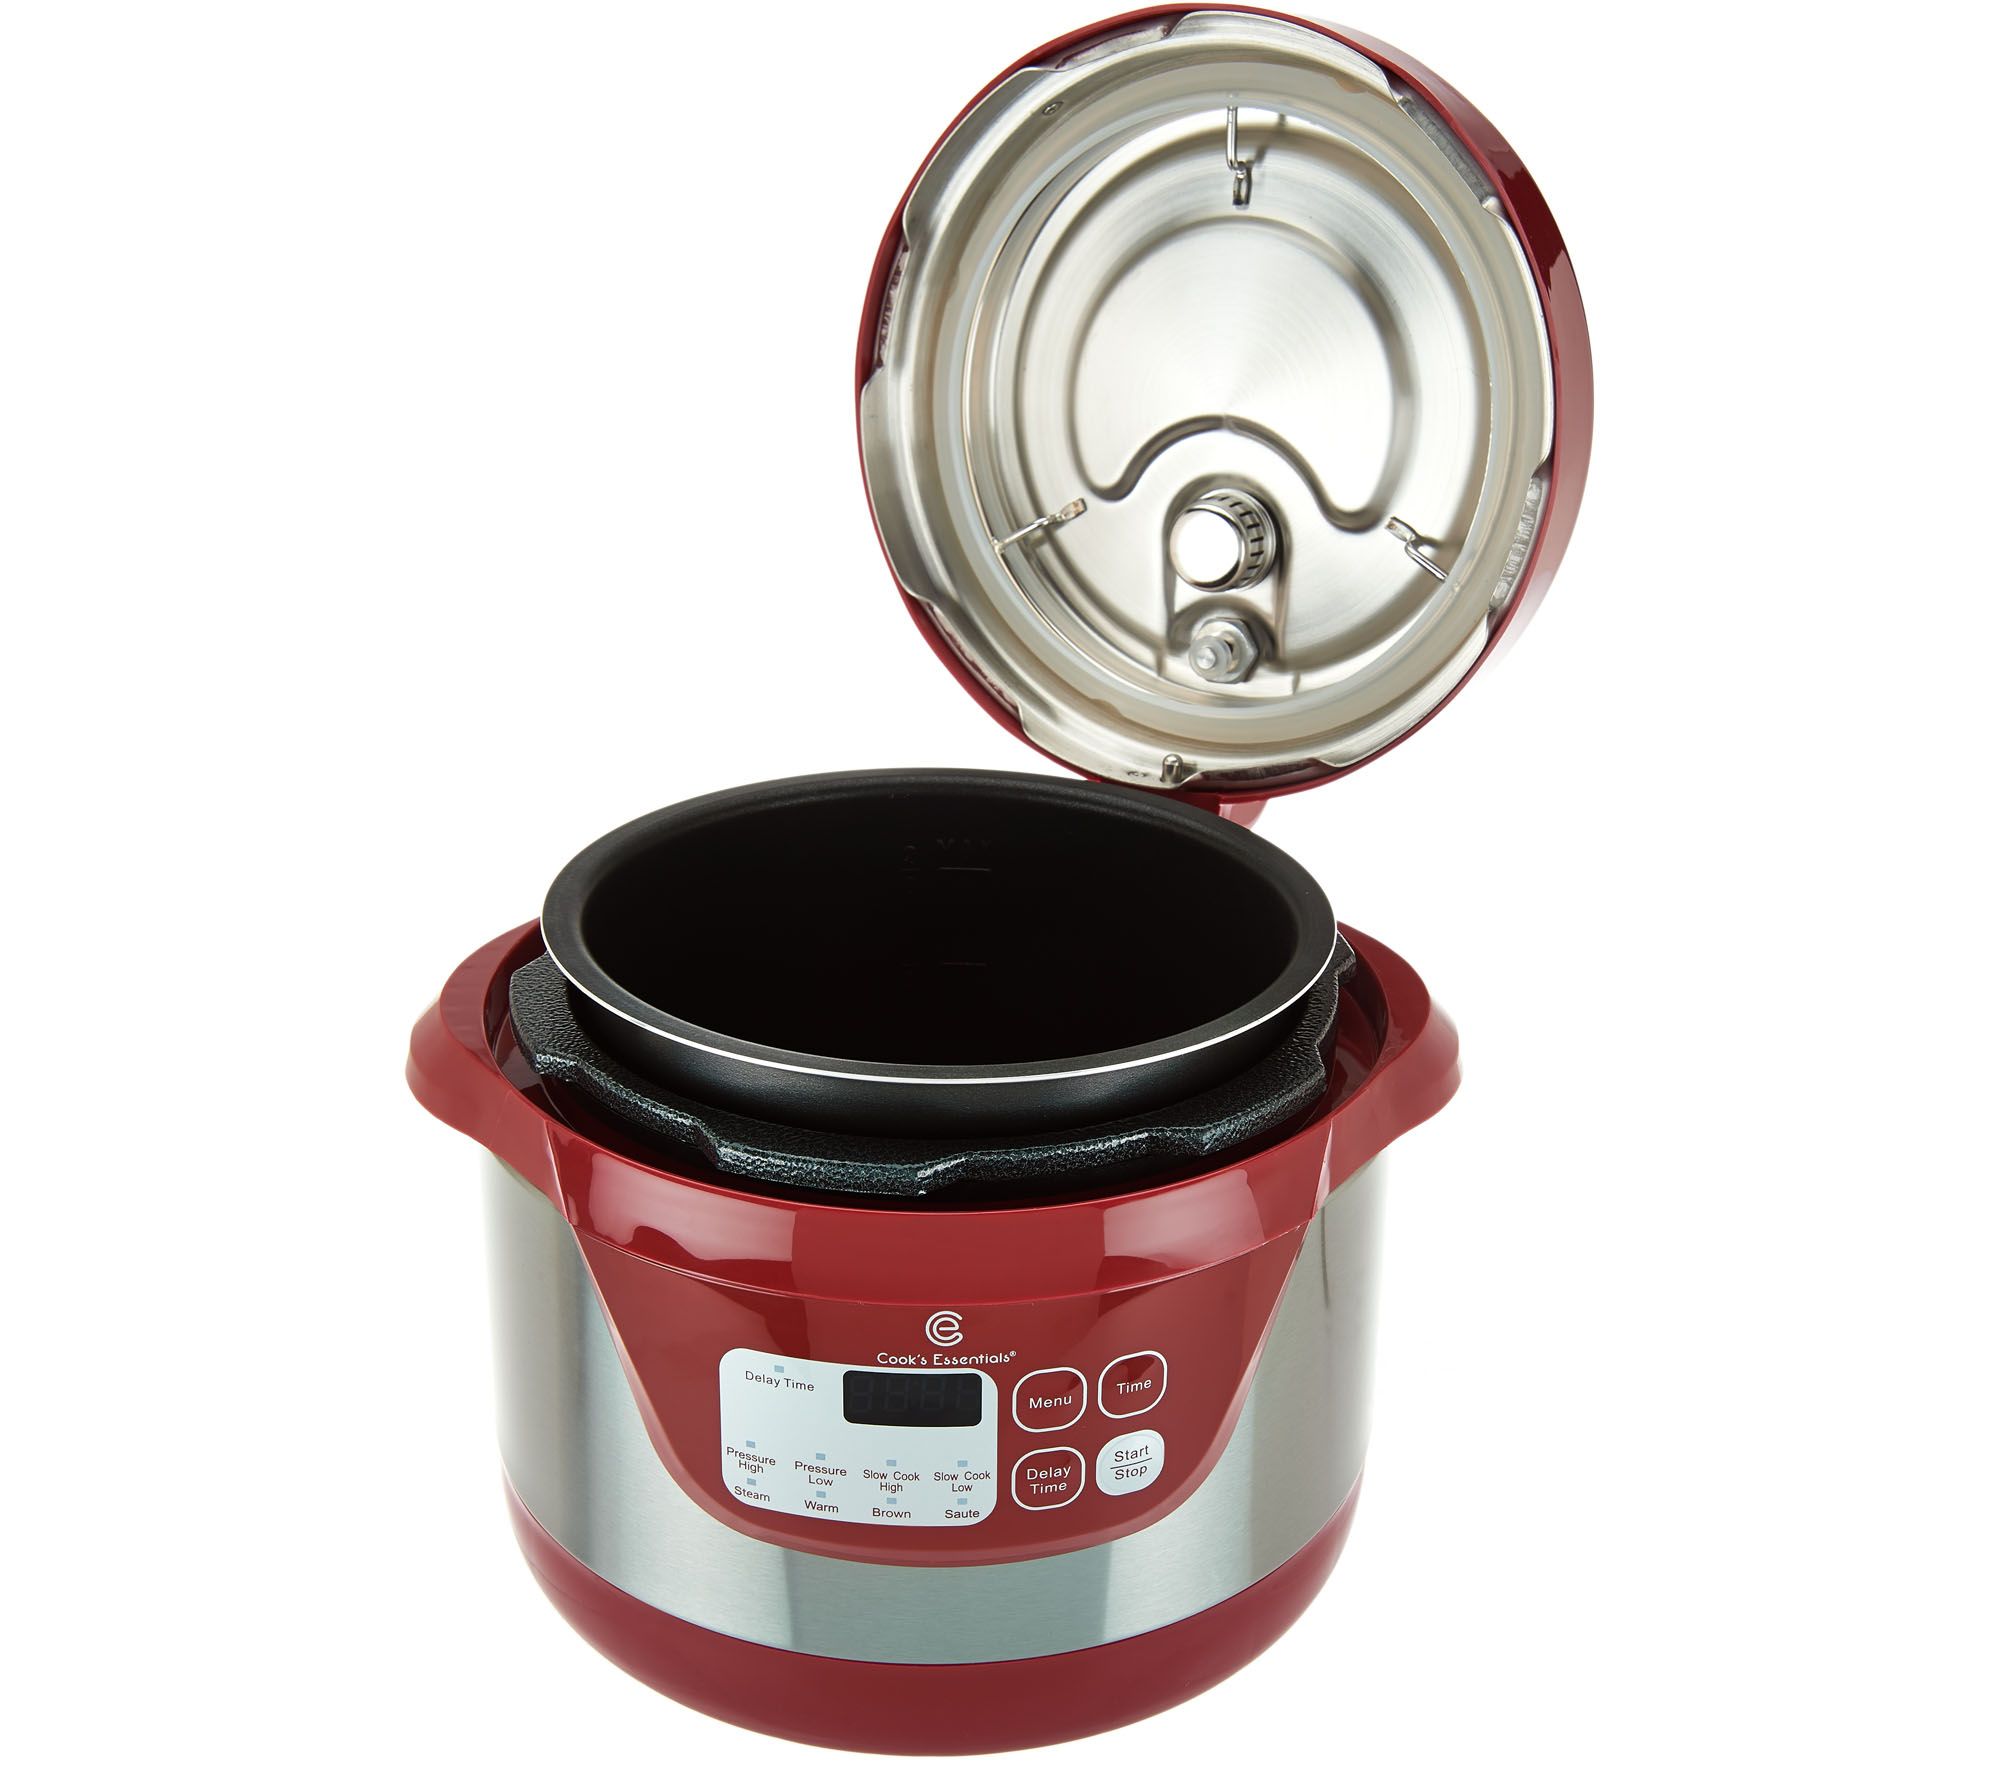 Cook's Essentials 2qt Digital Stainless Steel Pressure Cooker CINNAMON RED 